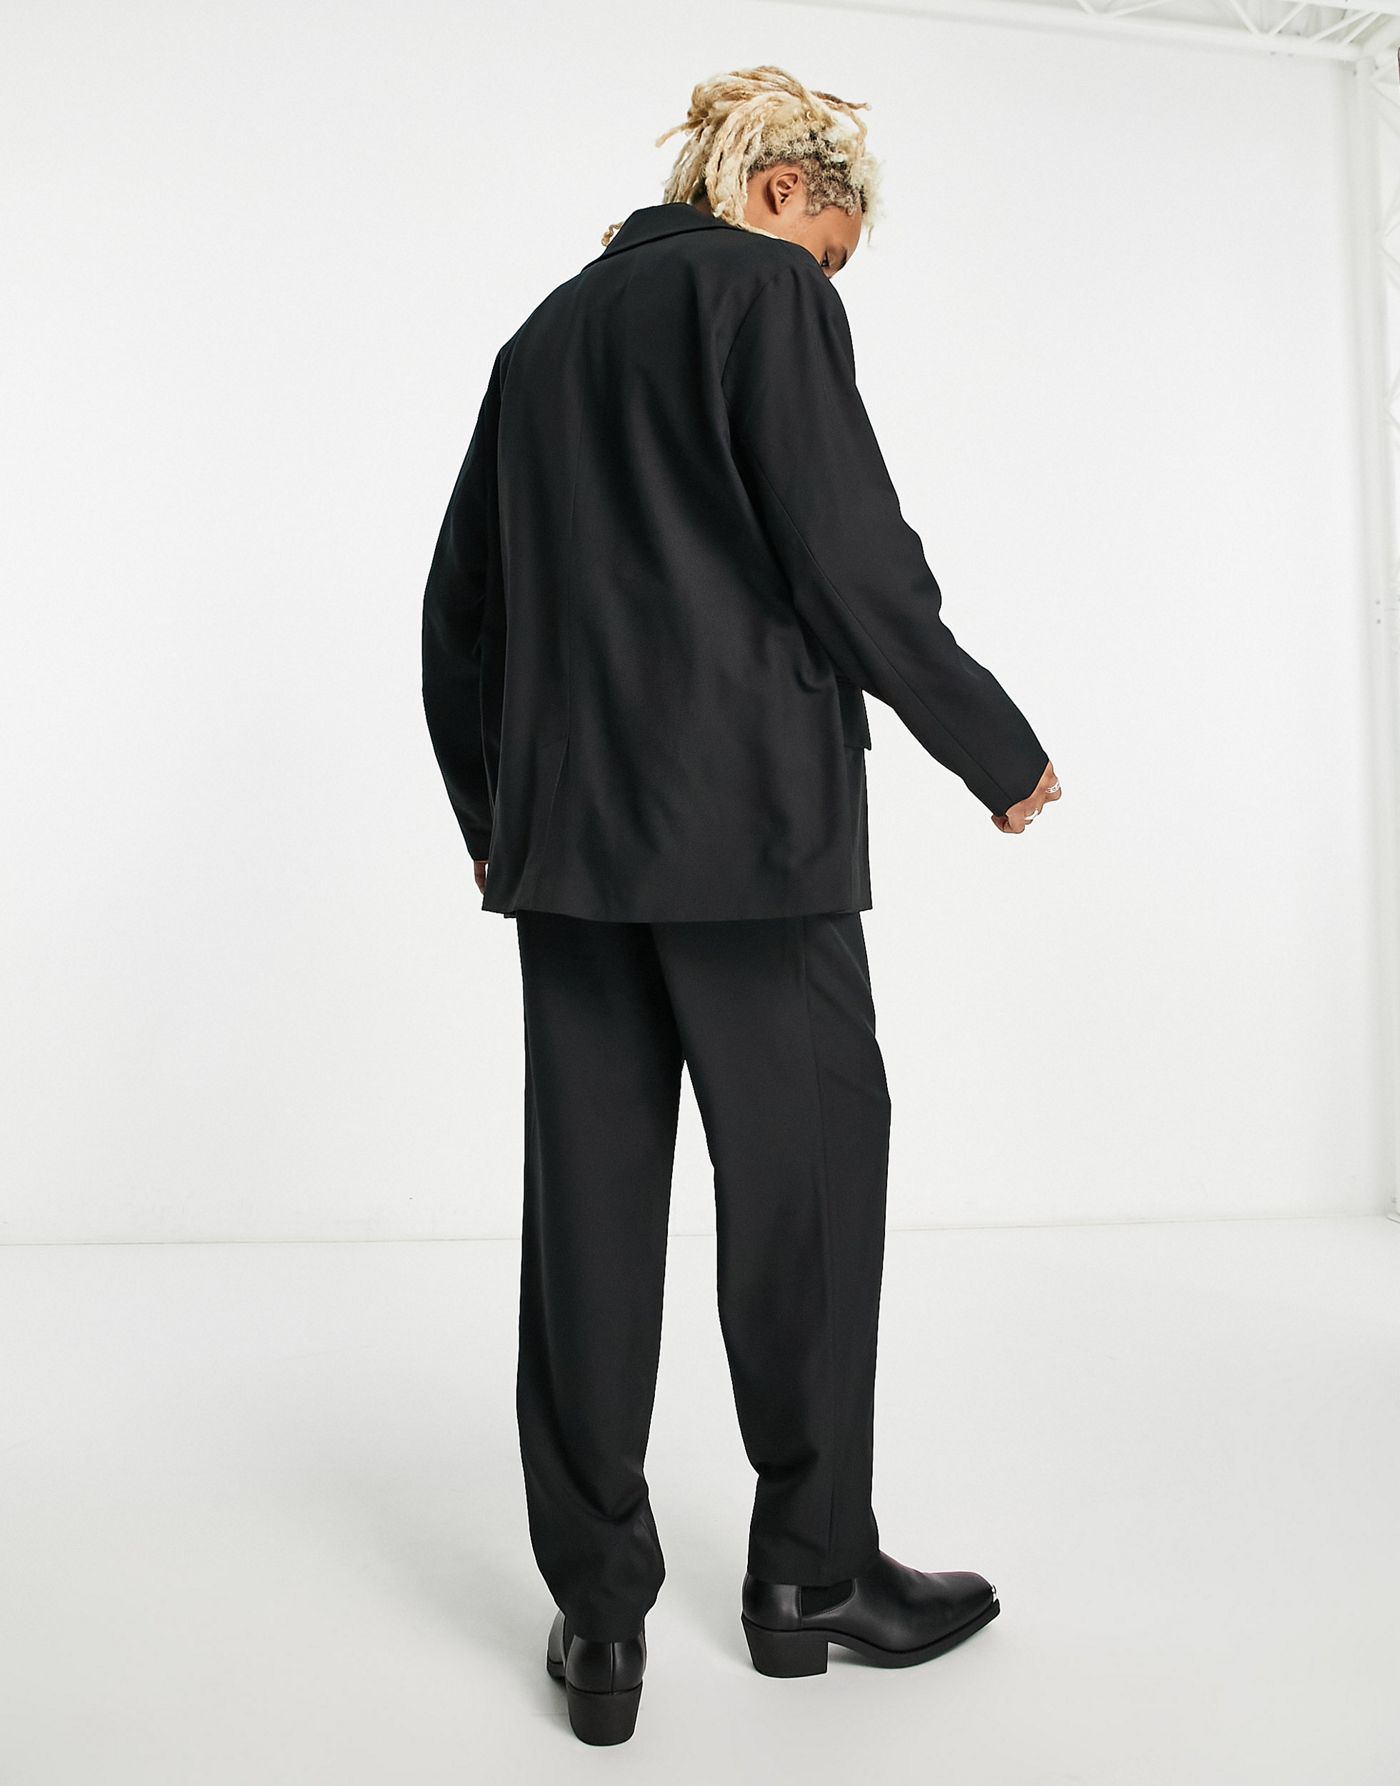 ADPT oversized suit jacket in black 